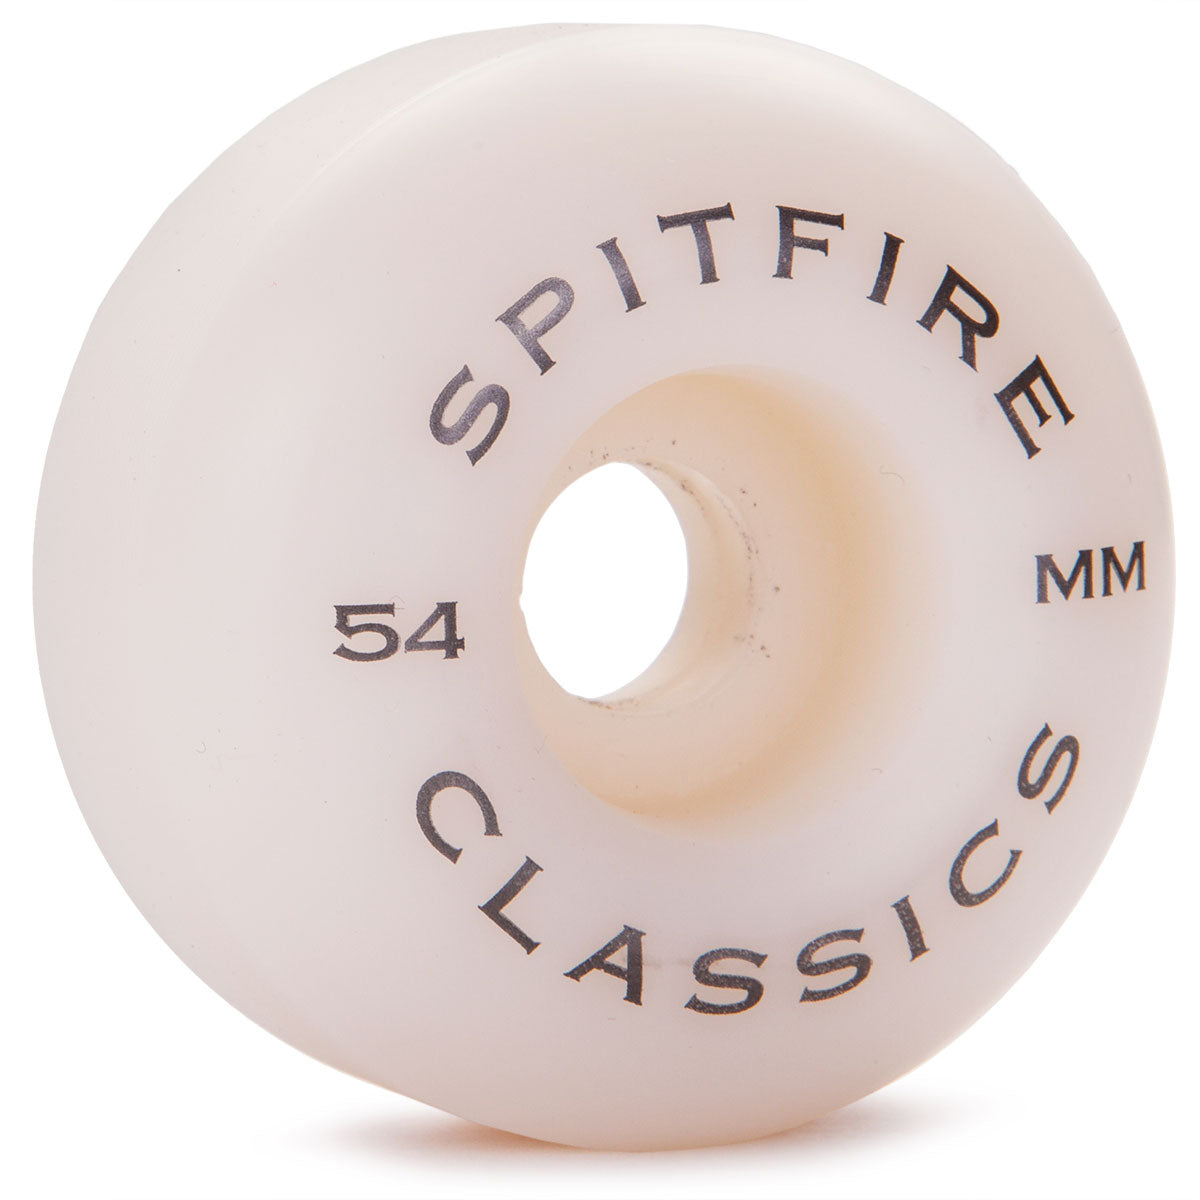 Spitfire Classics Skateboard Wheels - 54mm image 2